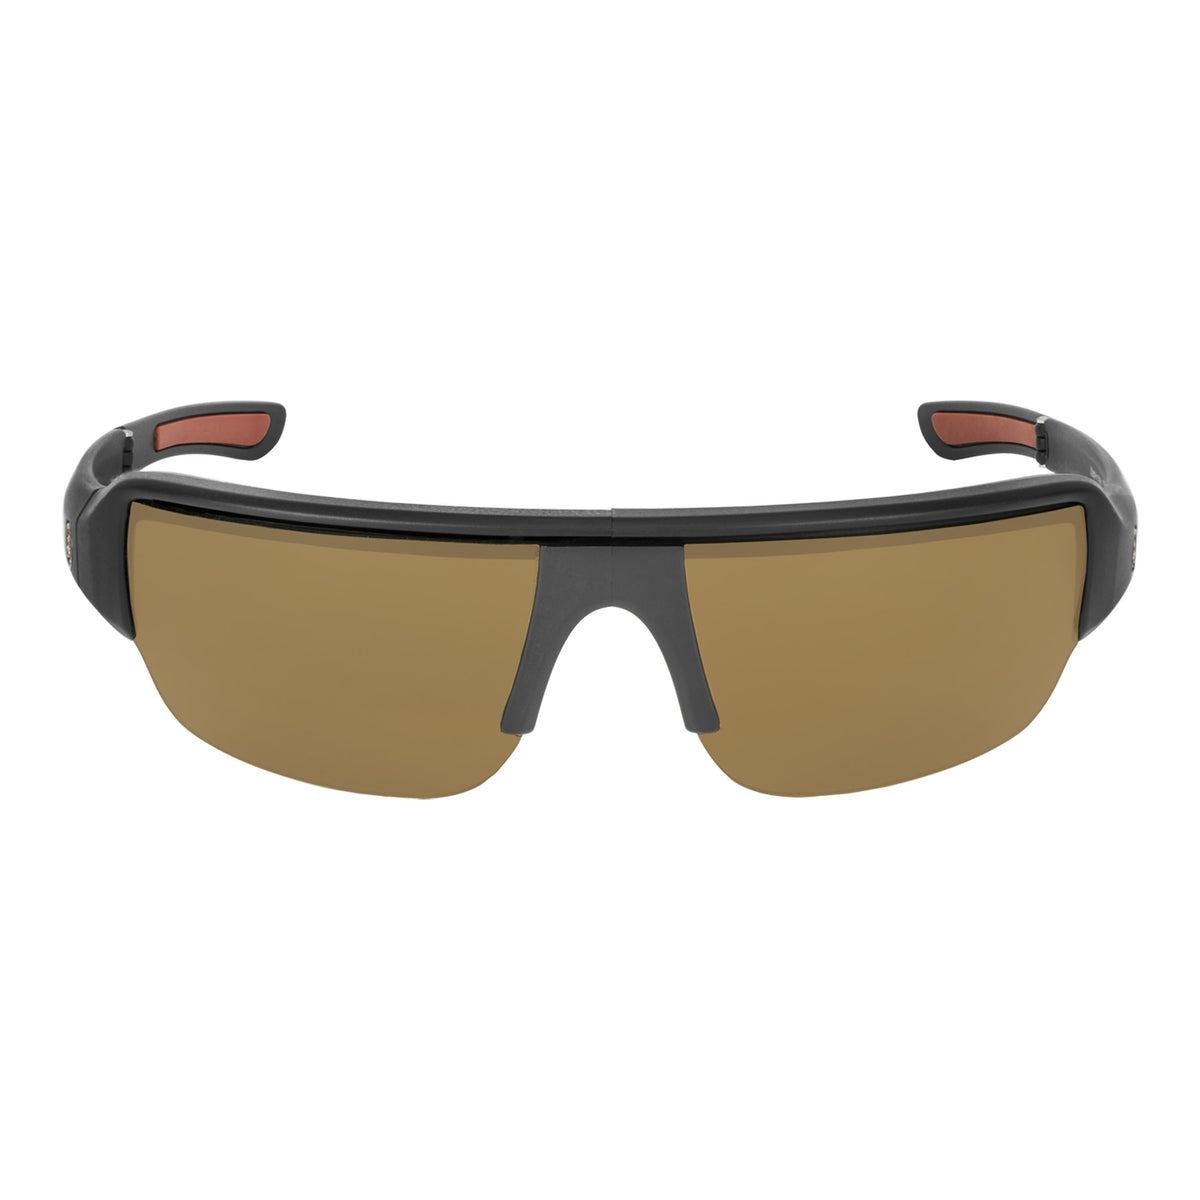 Popticals, Premium Compact Sunglasses, PopGun, 010010-NMNP, Polarized Sunglasses, Matte Black Frame, Brown Lenses, Front View